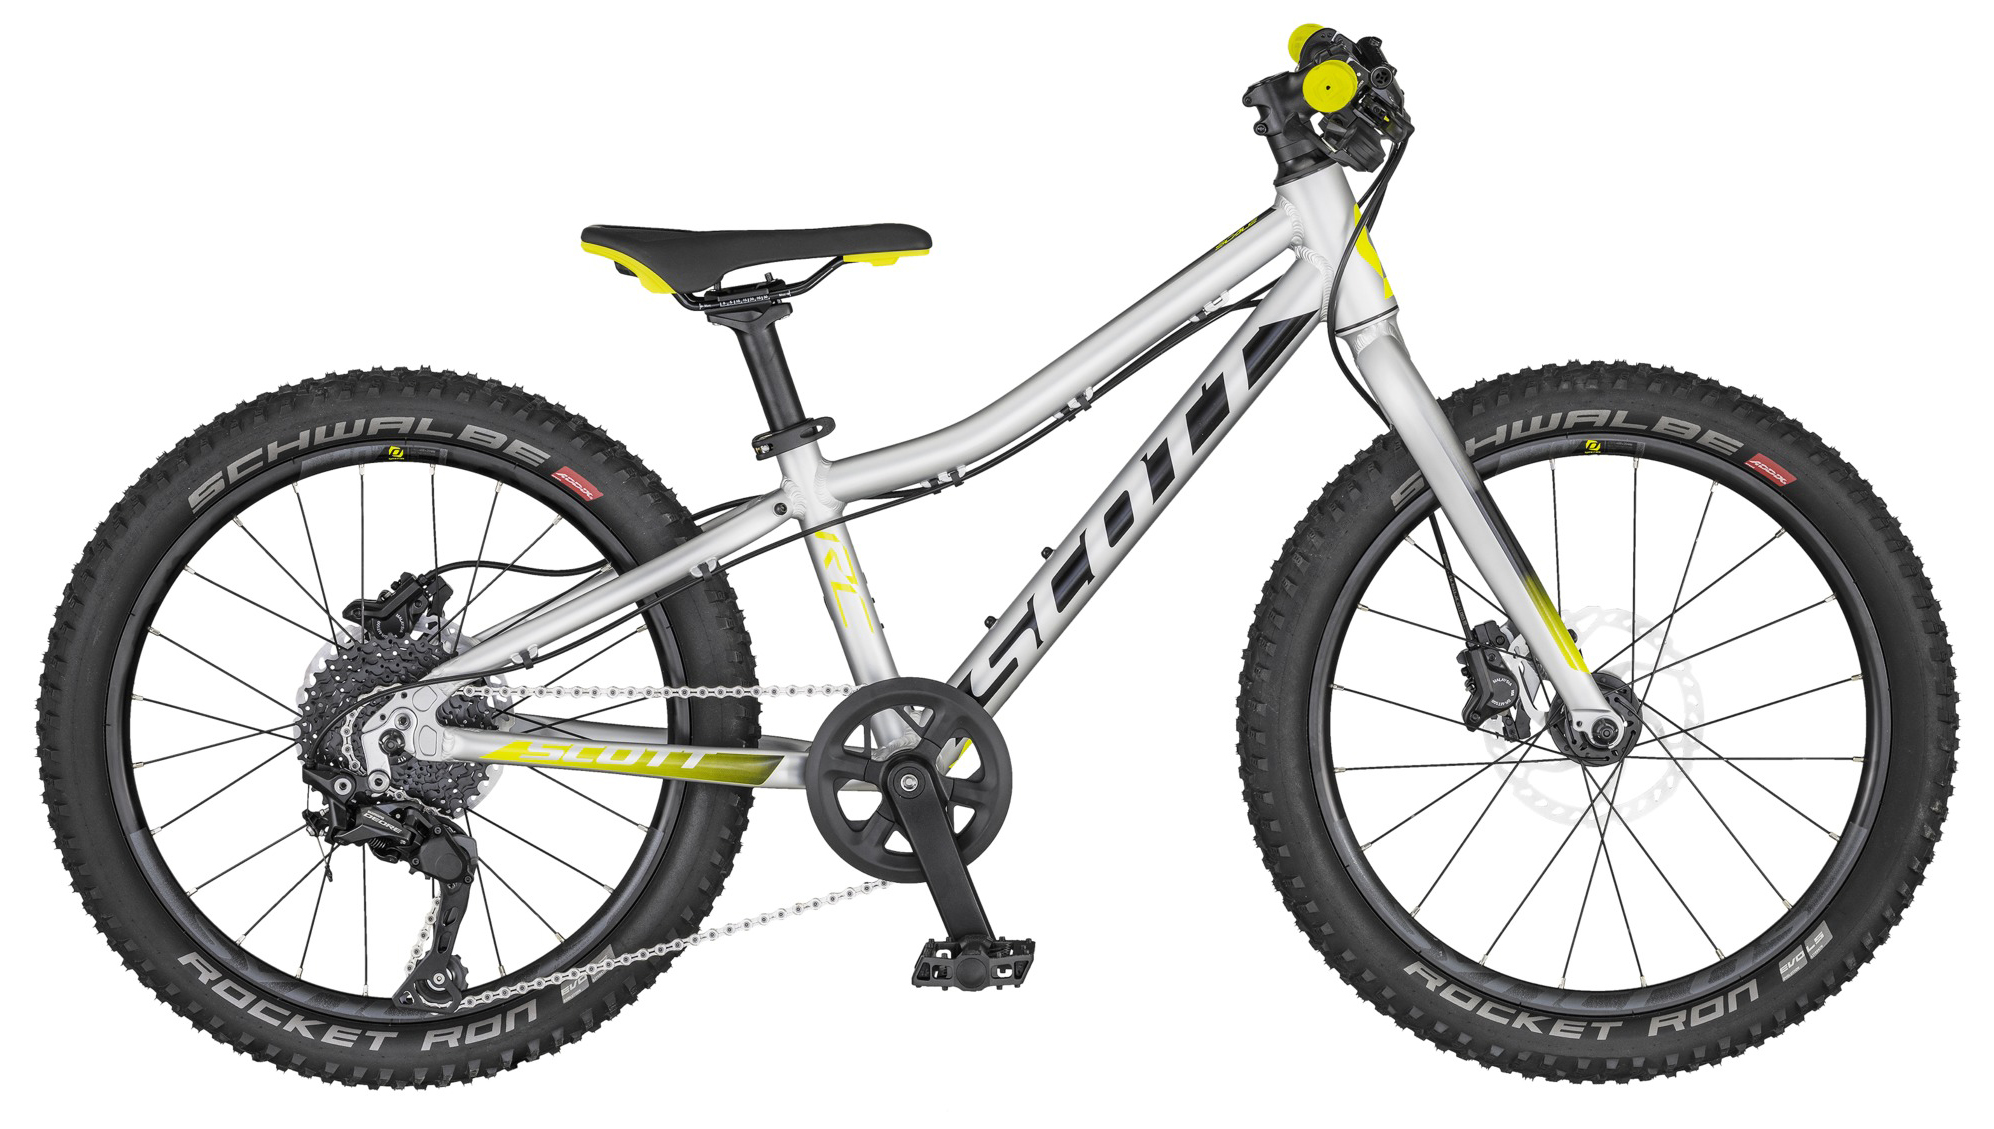  Отзывы о Детском велосипеде Scott Scale RC 20 rigid 2020